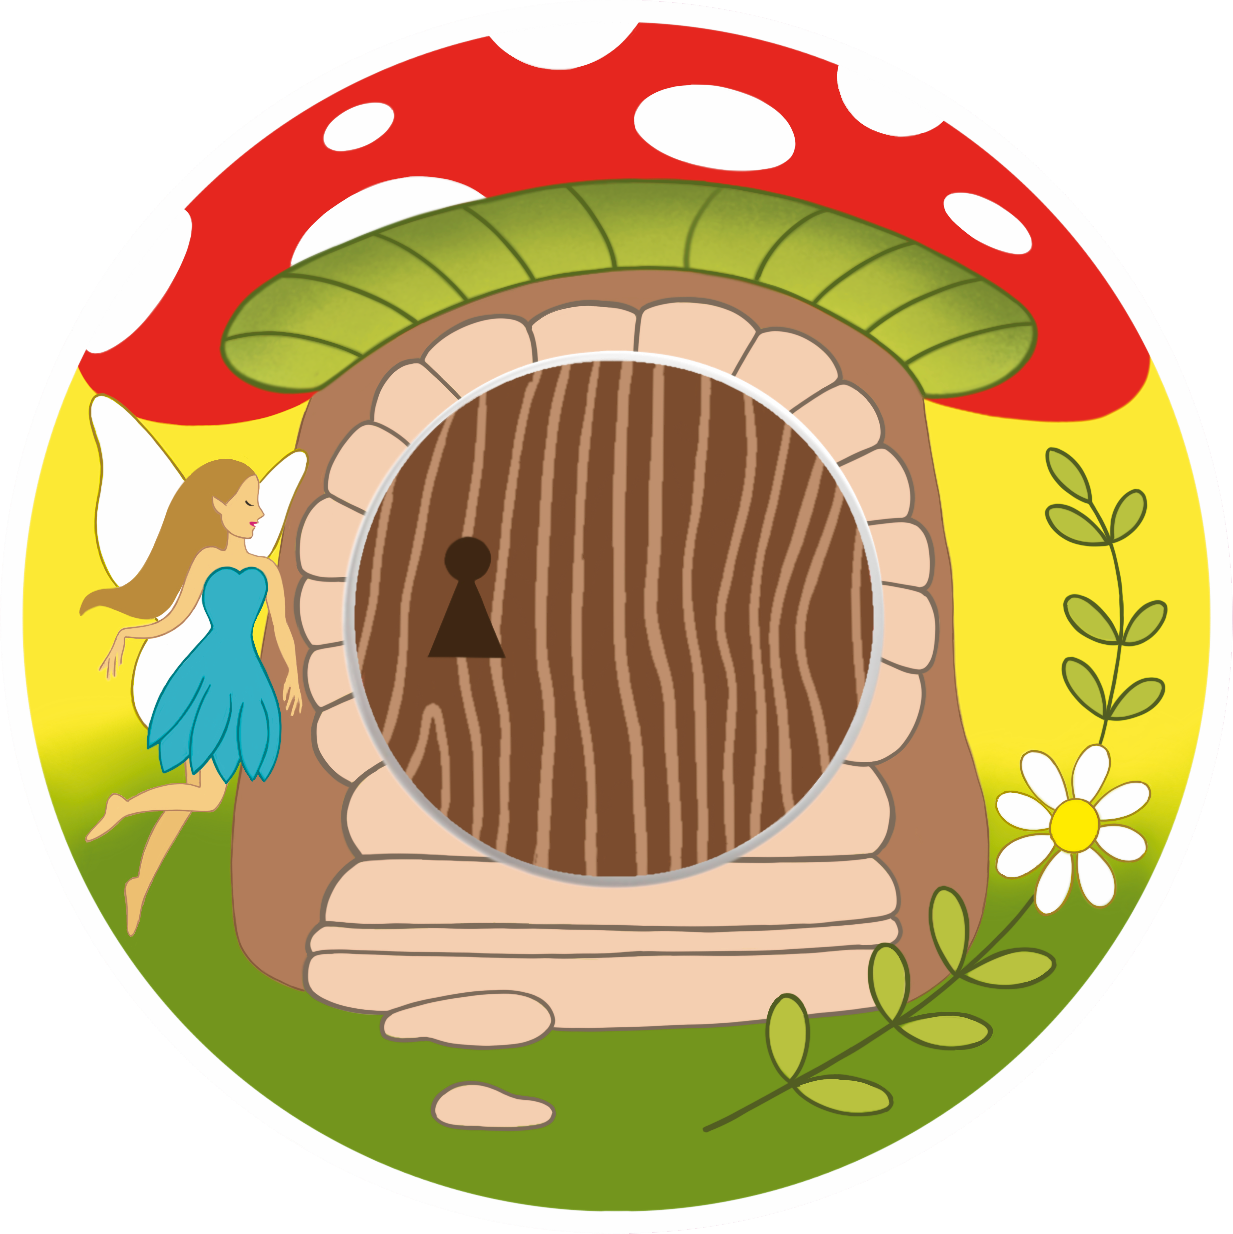 Fairy Toadstool Stickers